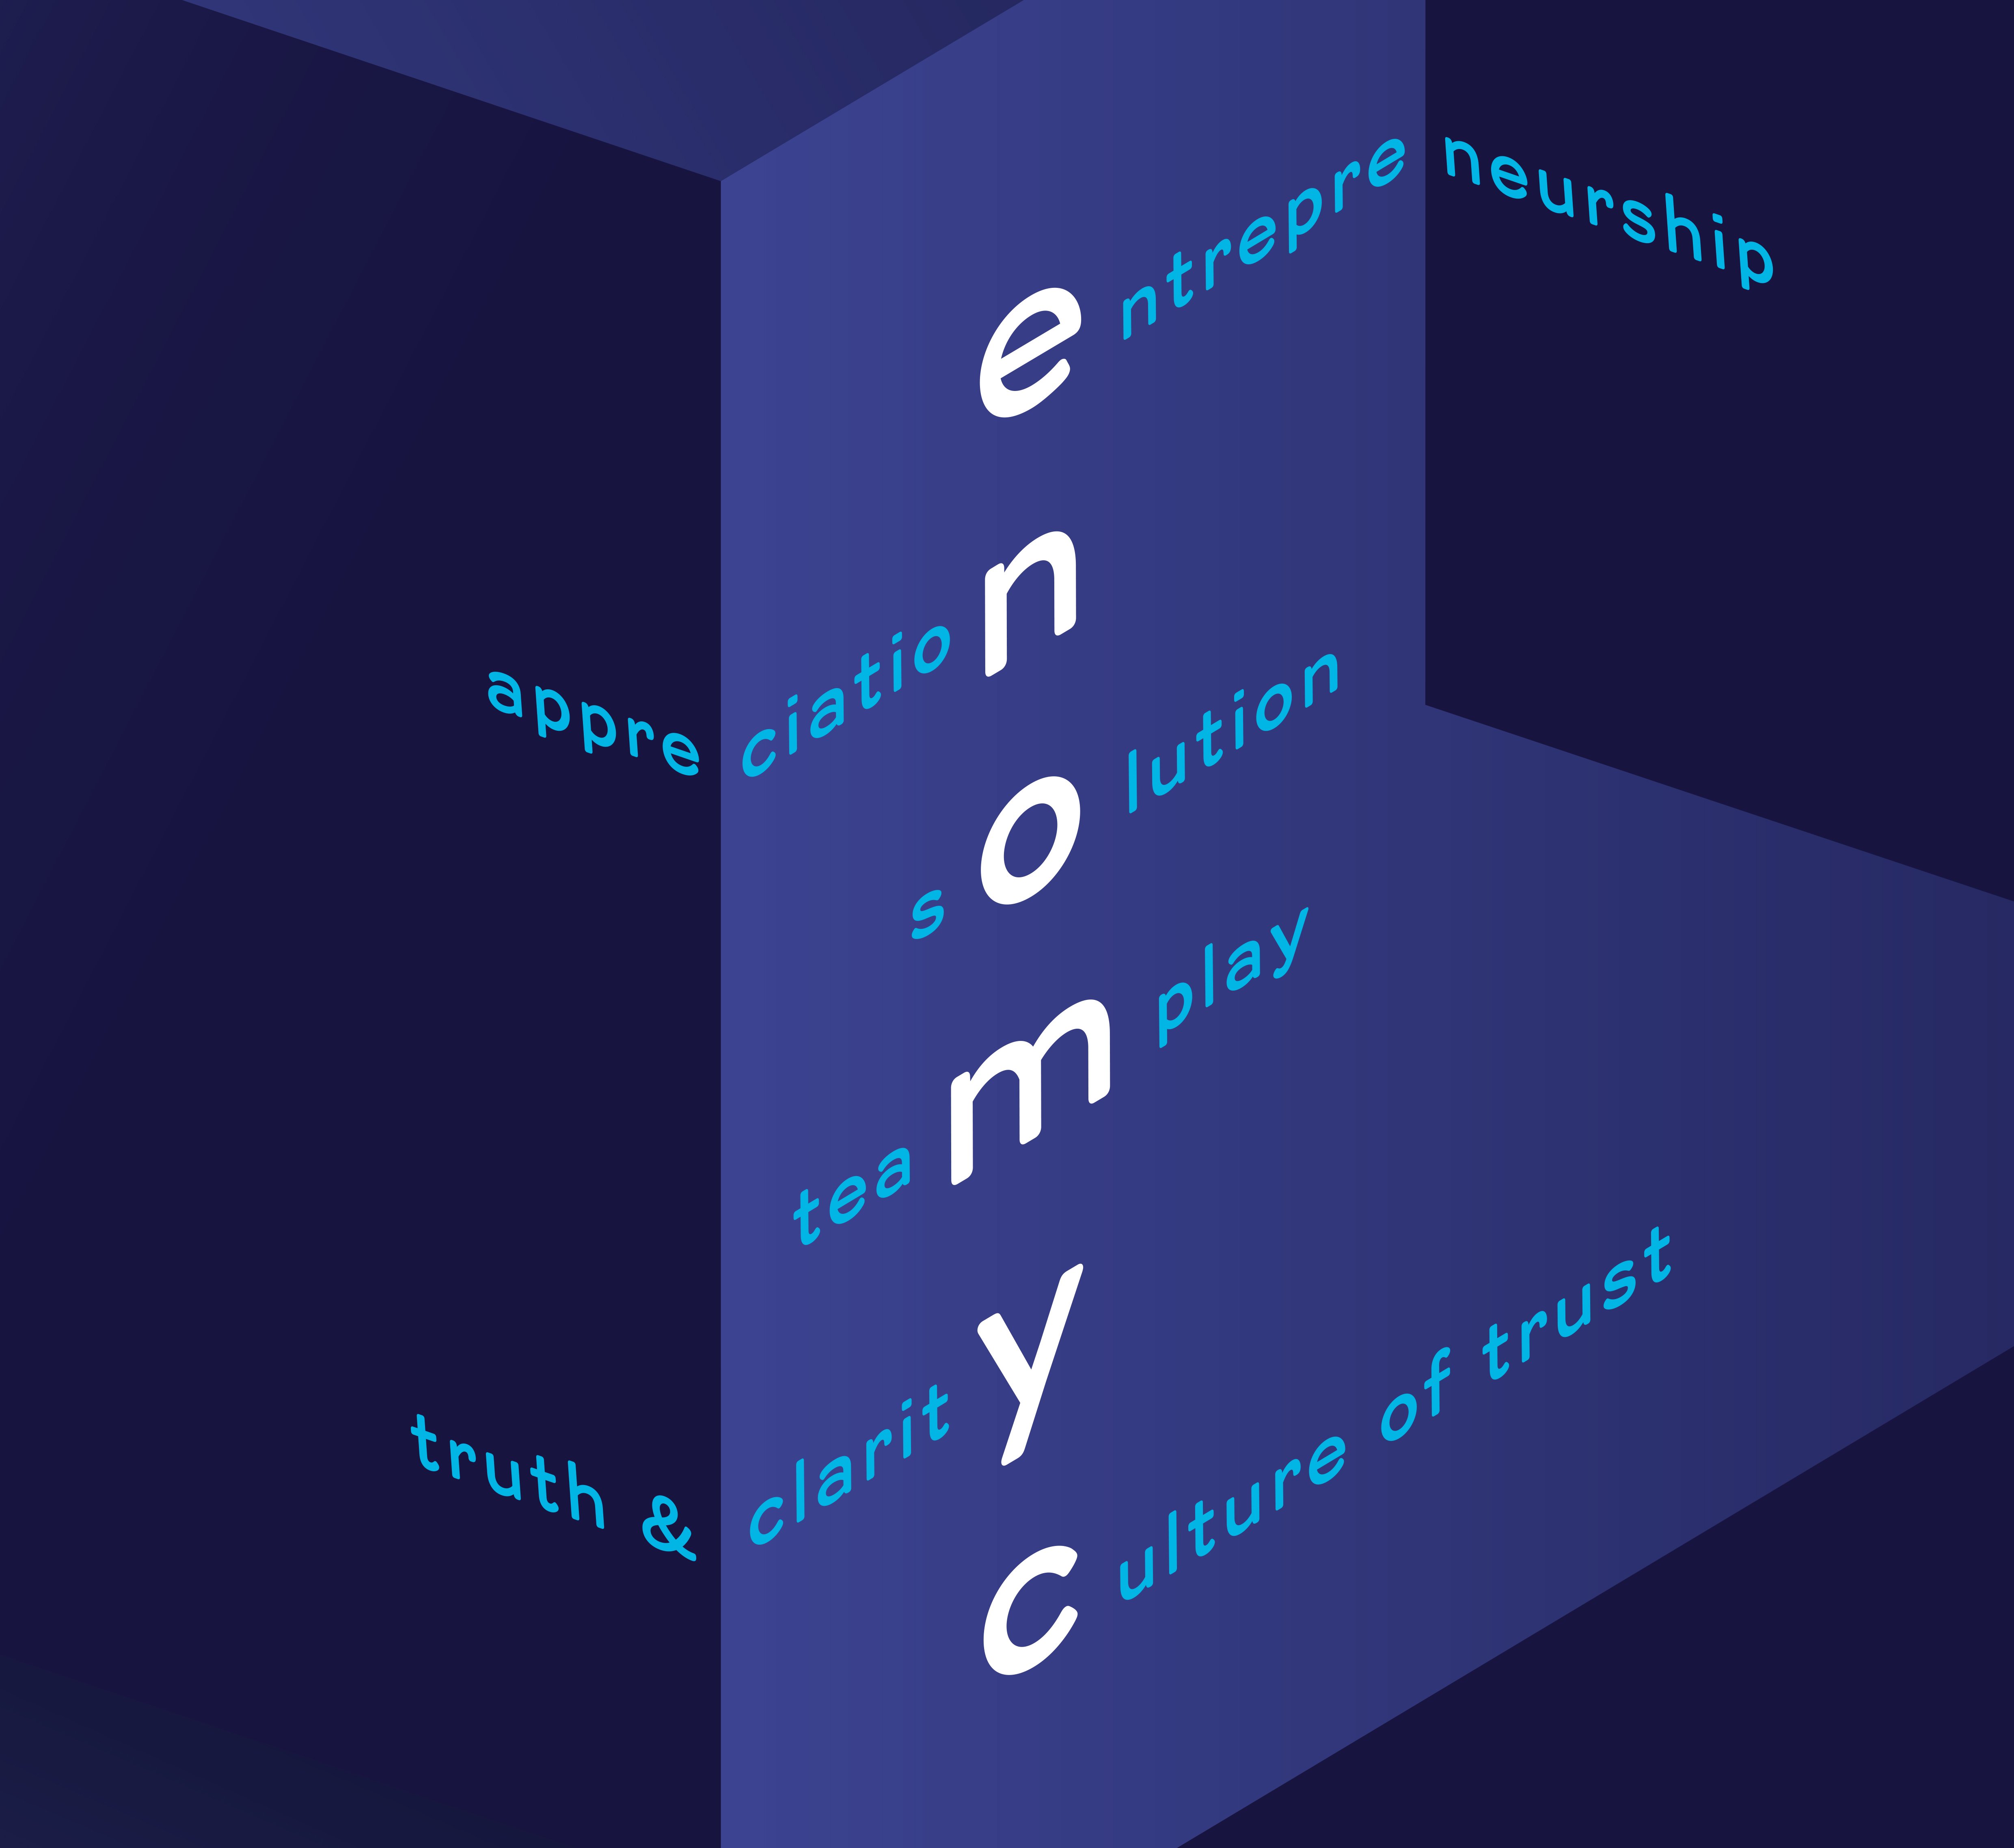 enomyc_core-values-1